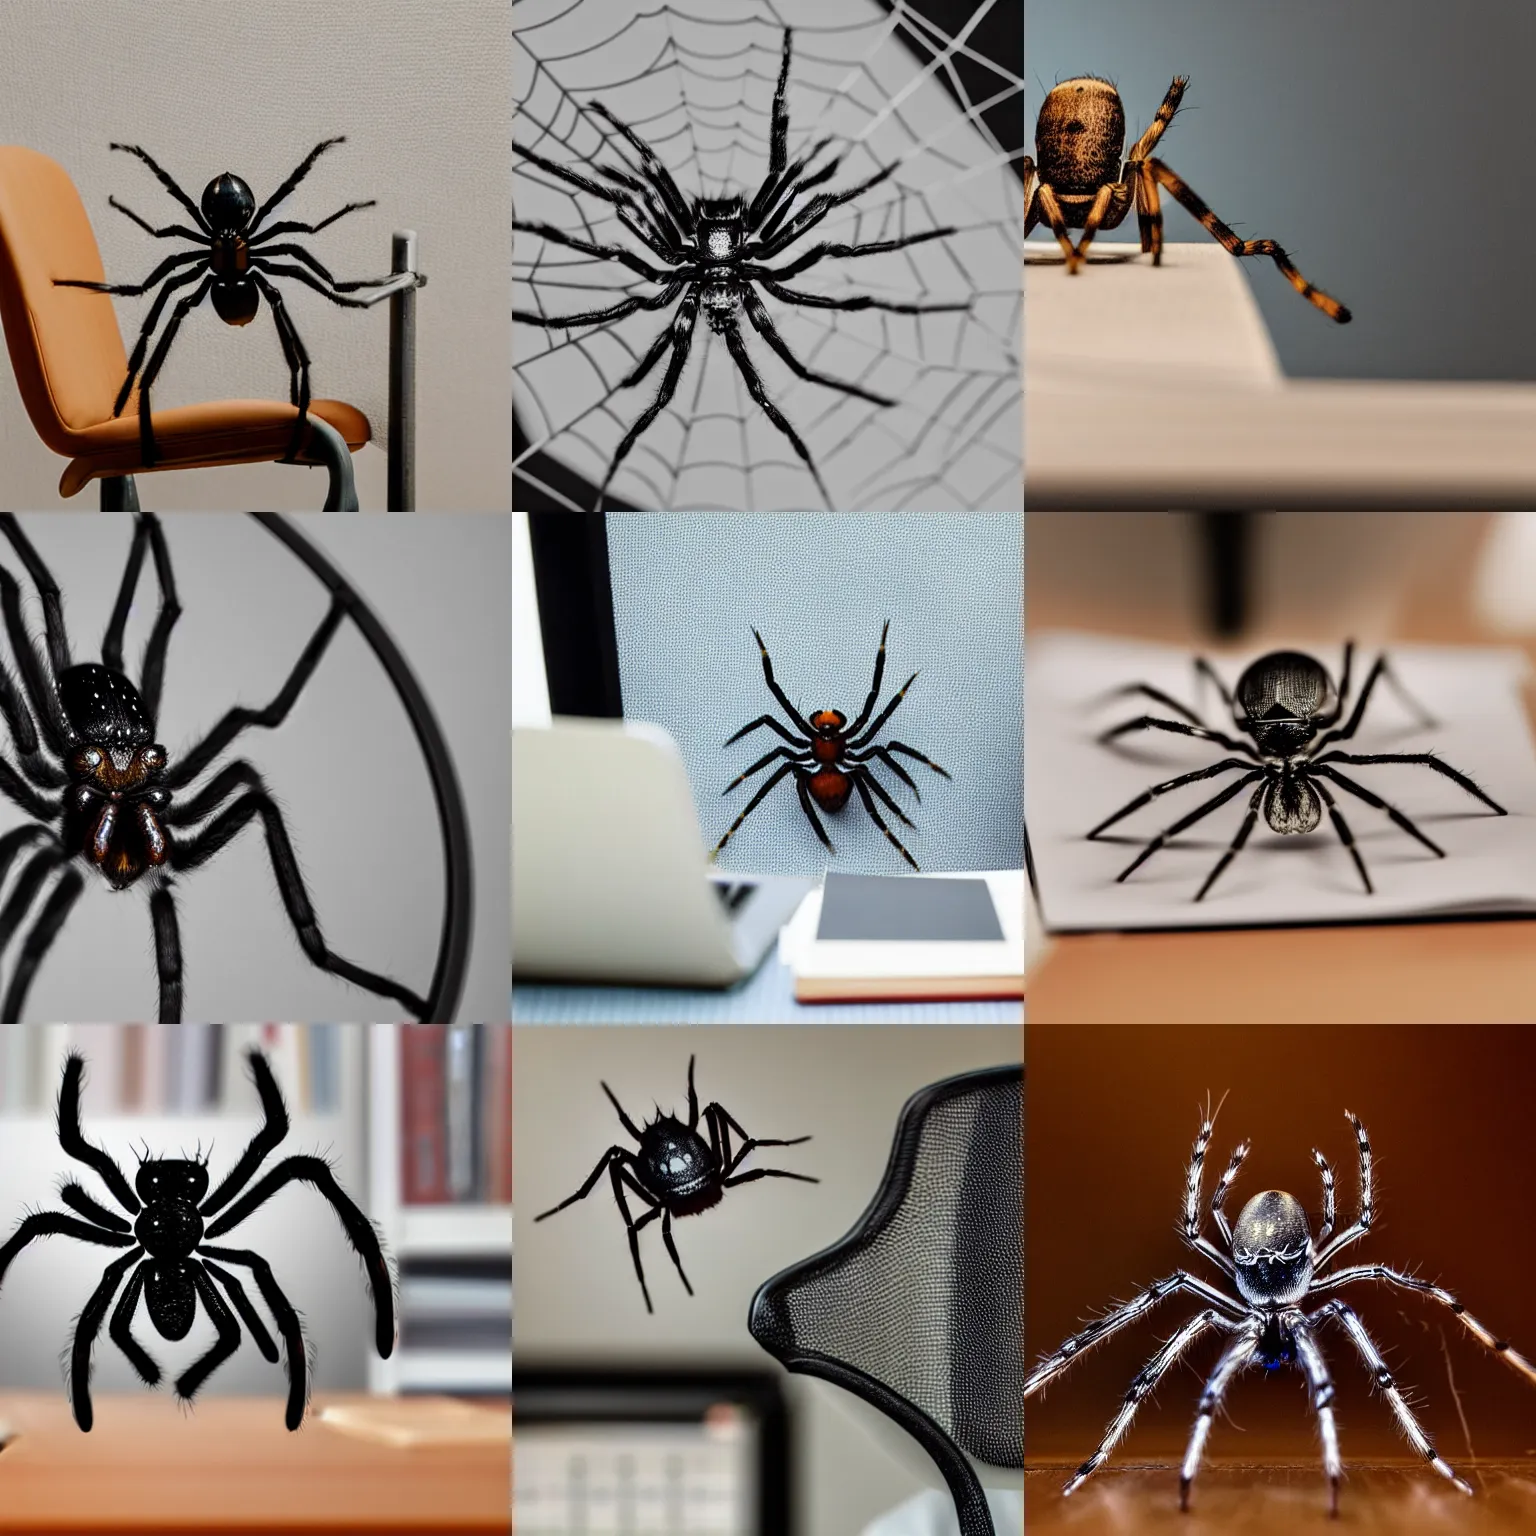 Prompt: spider sitting in chair behind desk